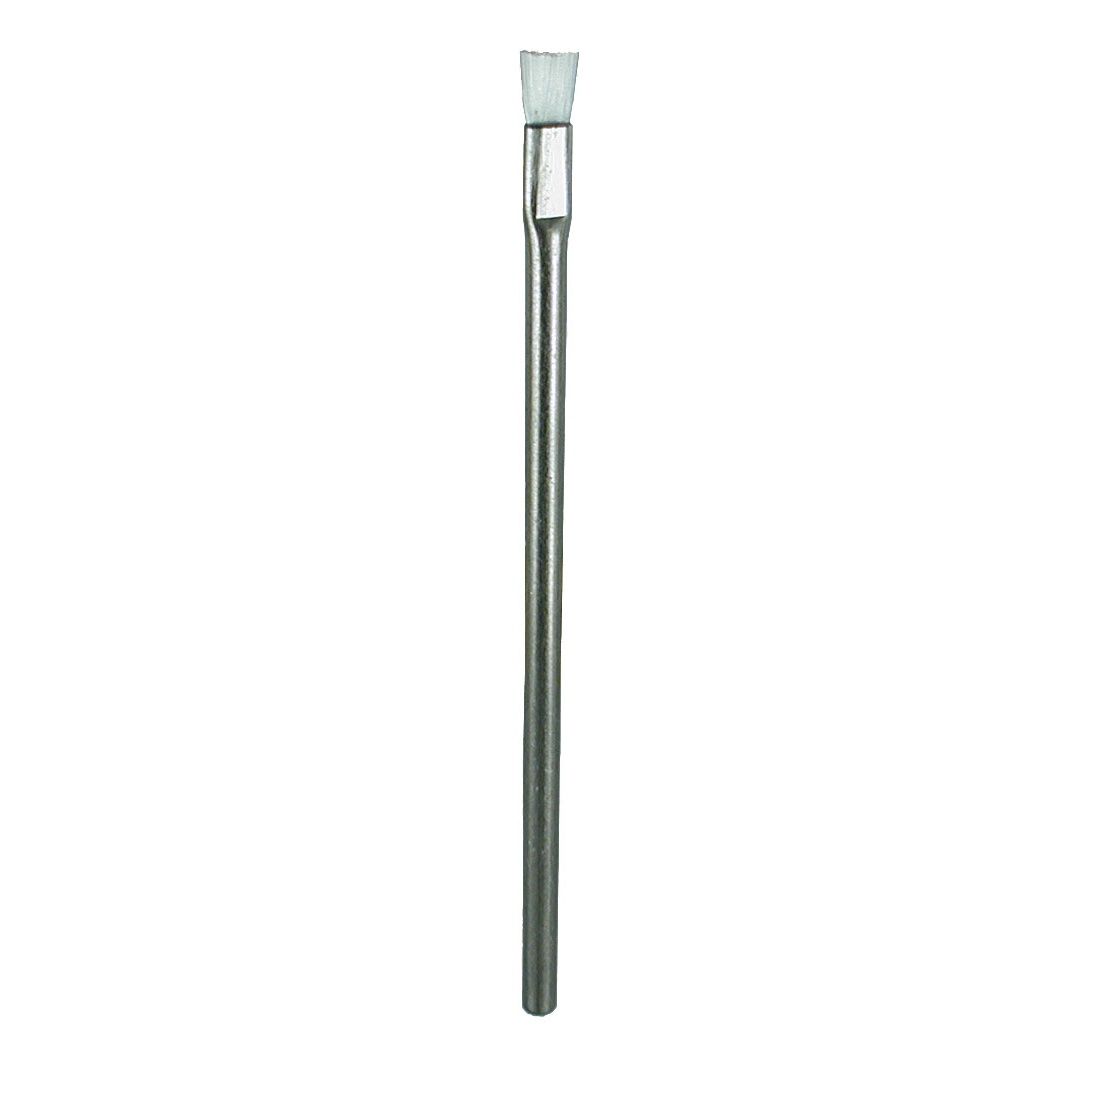 Applicator Brush — 0.006" PEEK Bristle / 1/8" Diameter Stainless Steel Tube Handle